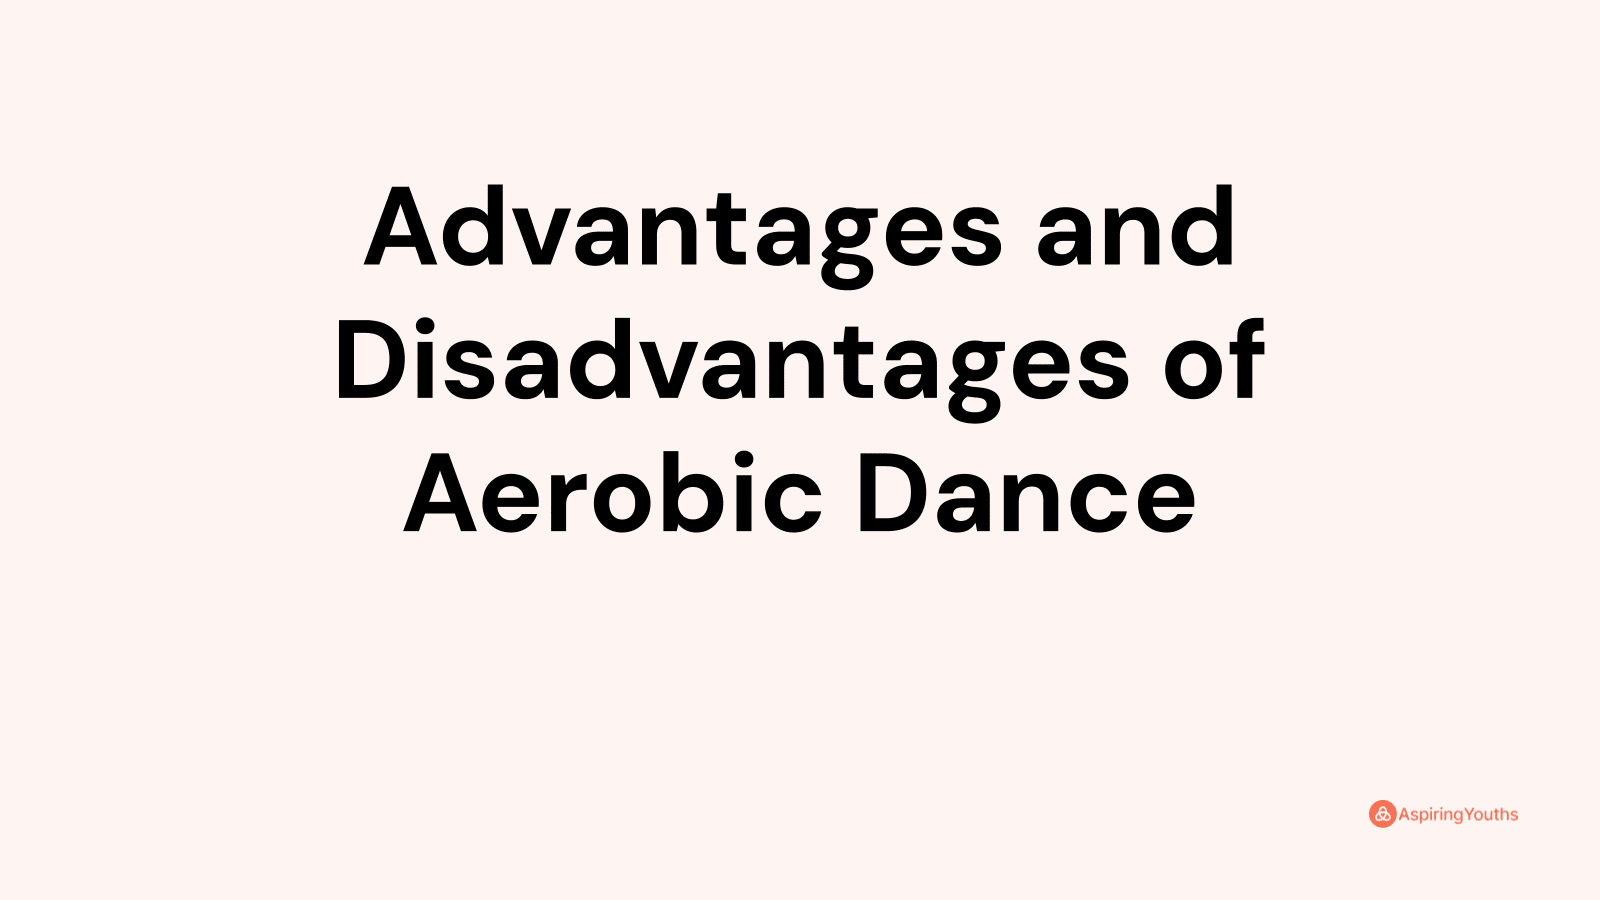 Advantages and disadvantages of Aerobic Dance